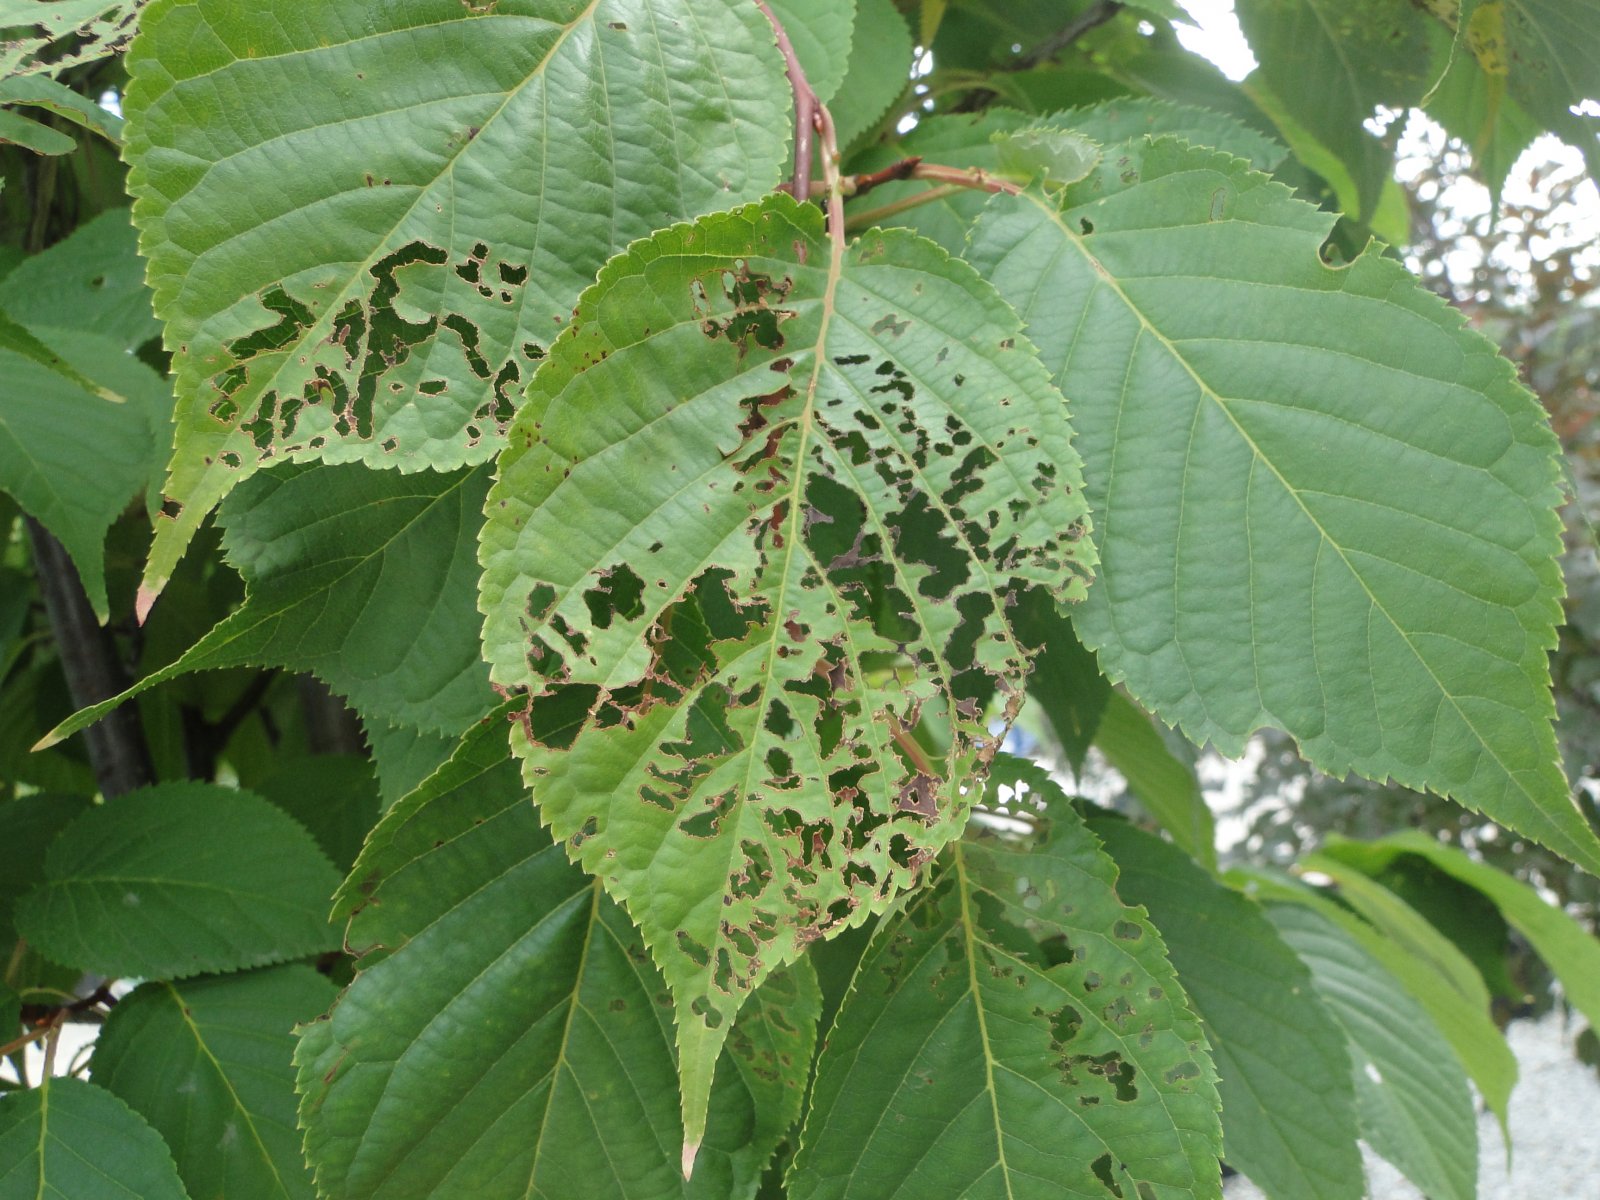 Japanese beetle damages leaf